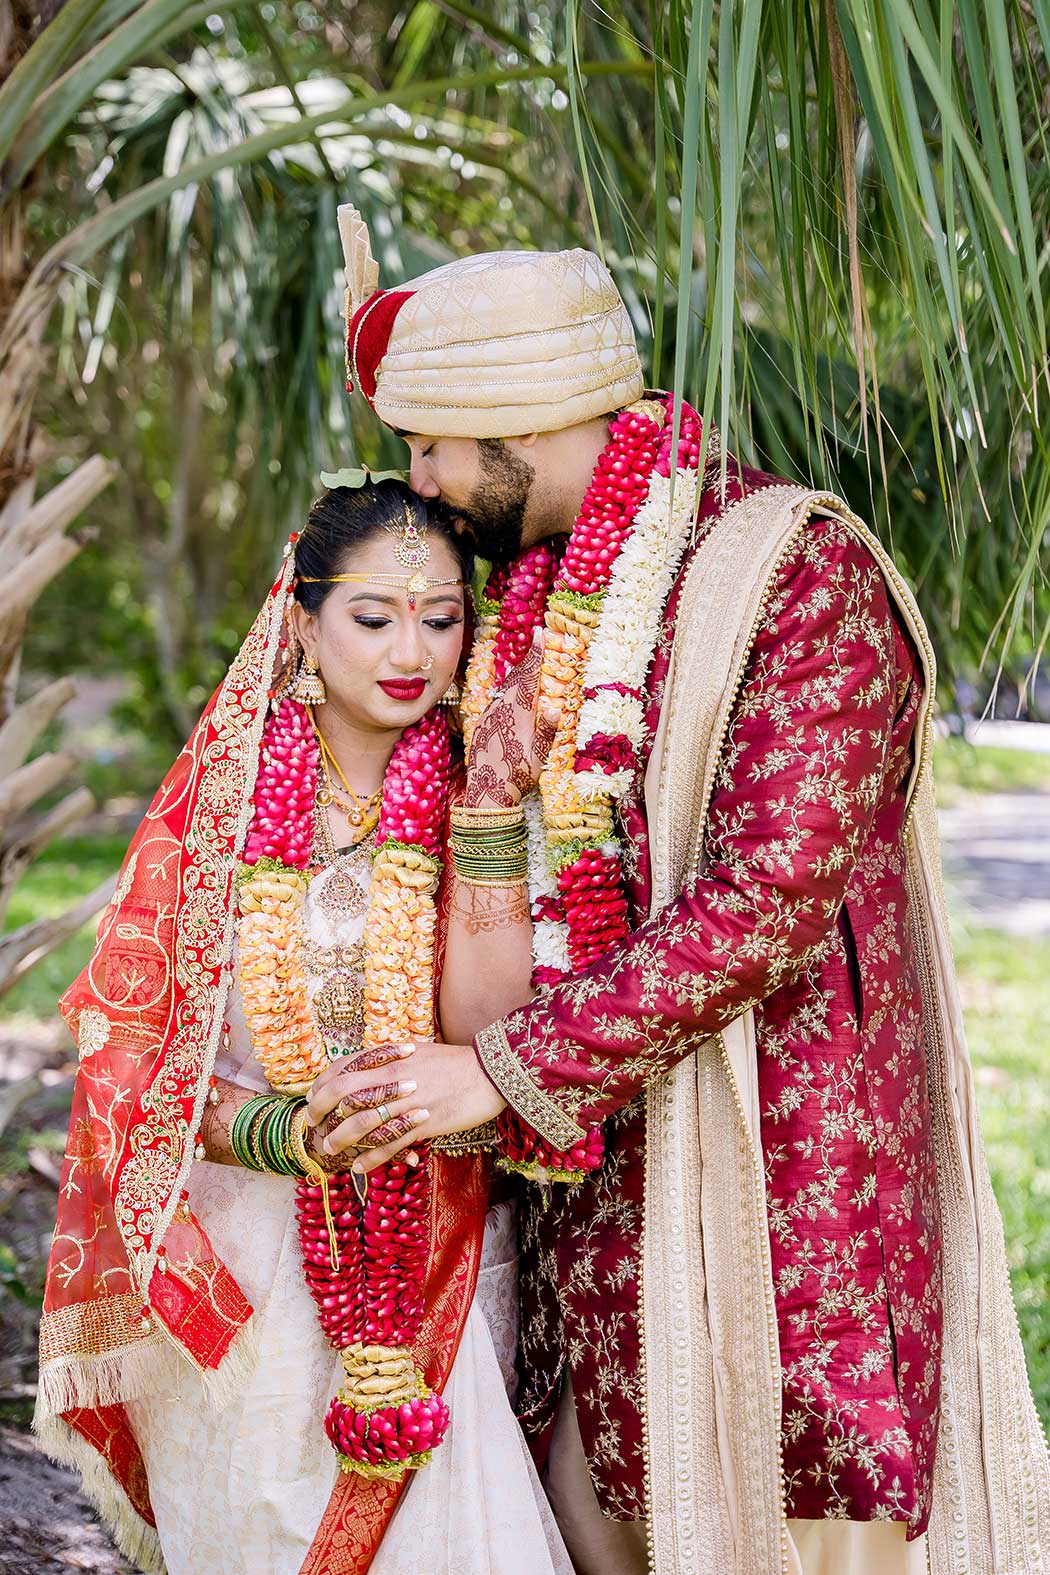 fort lauderdale indian wedding photographs | indian wedding portraits at fort lauderdale Marriott hotel | fort lauderale indian wedding photographs